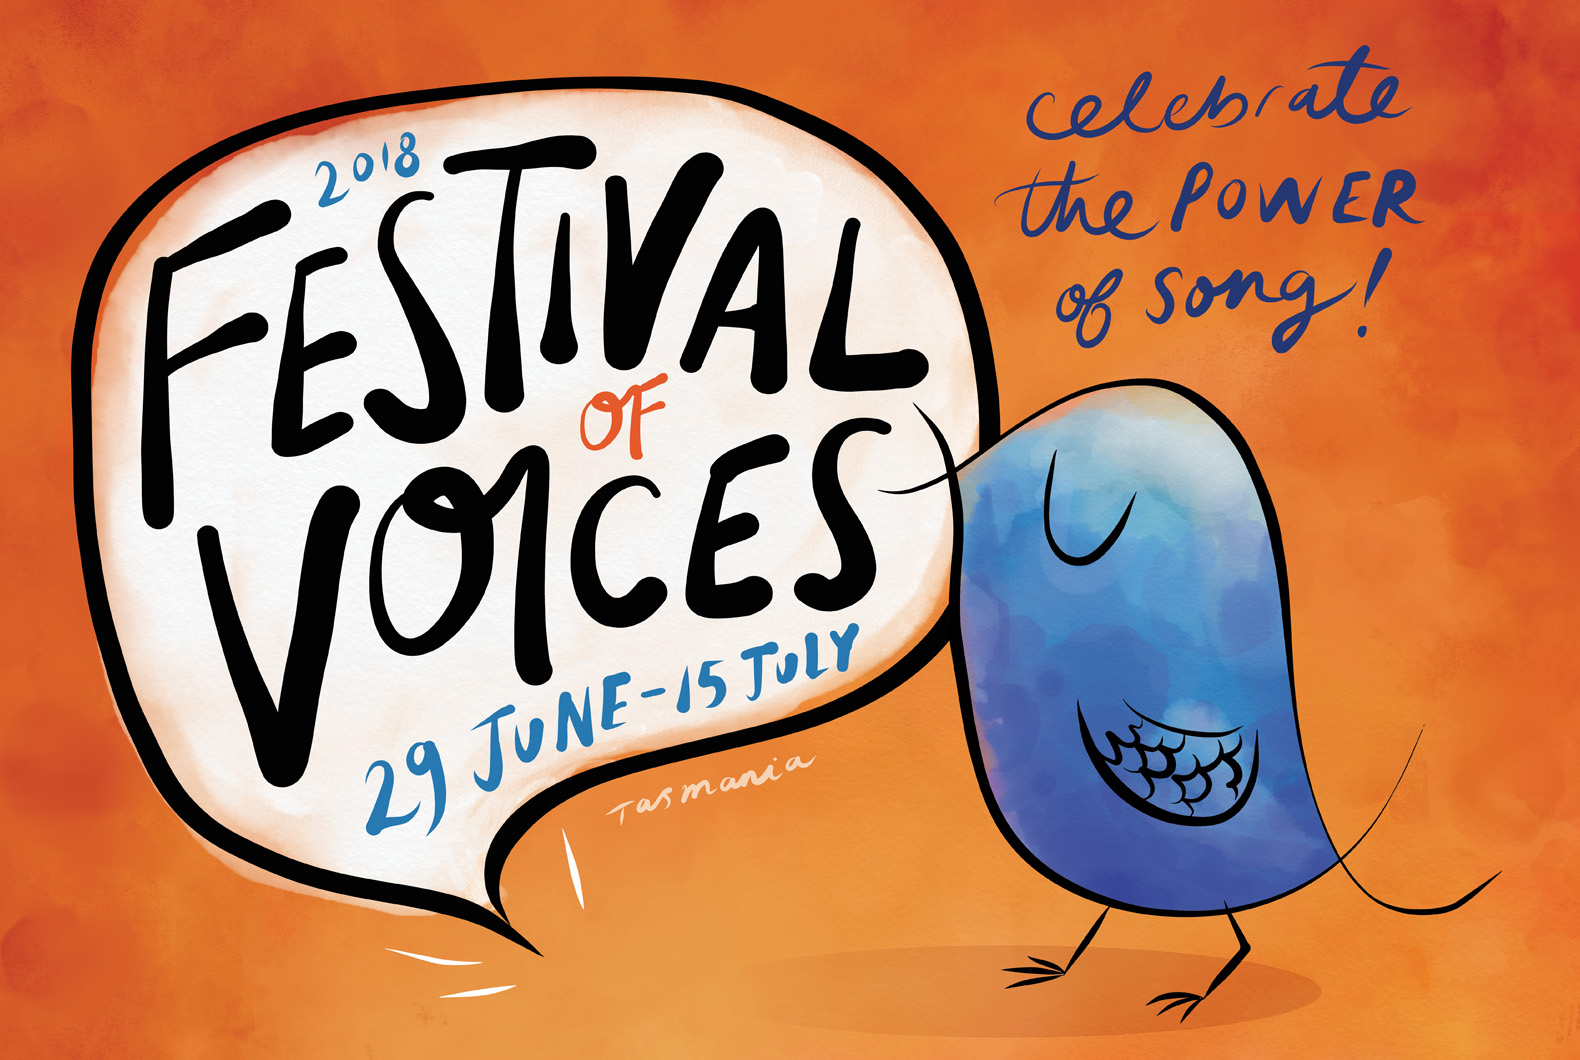 Festival of Voices program identity